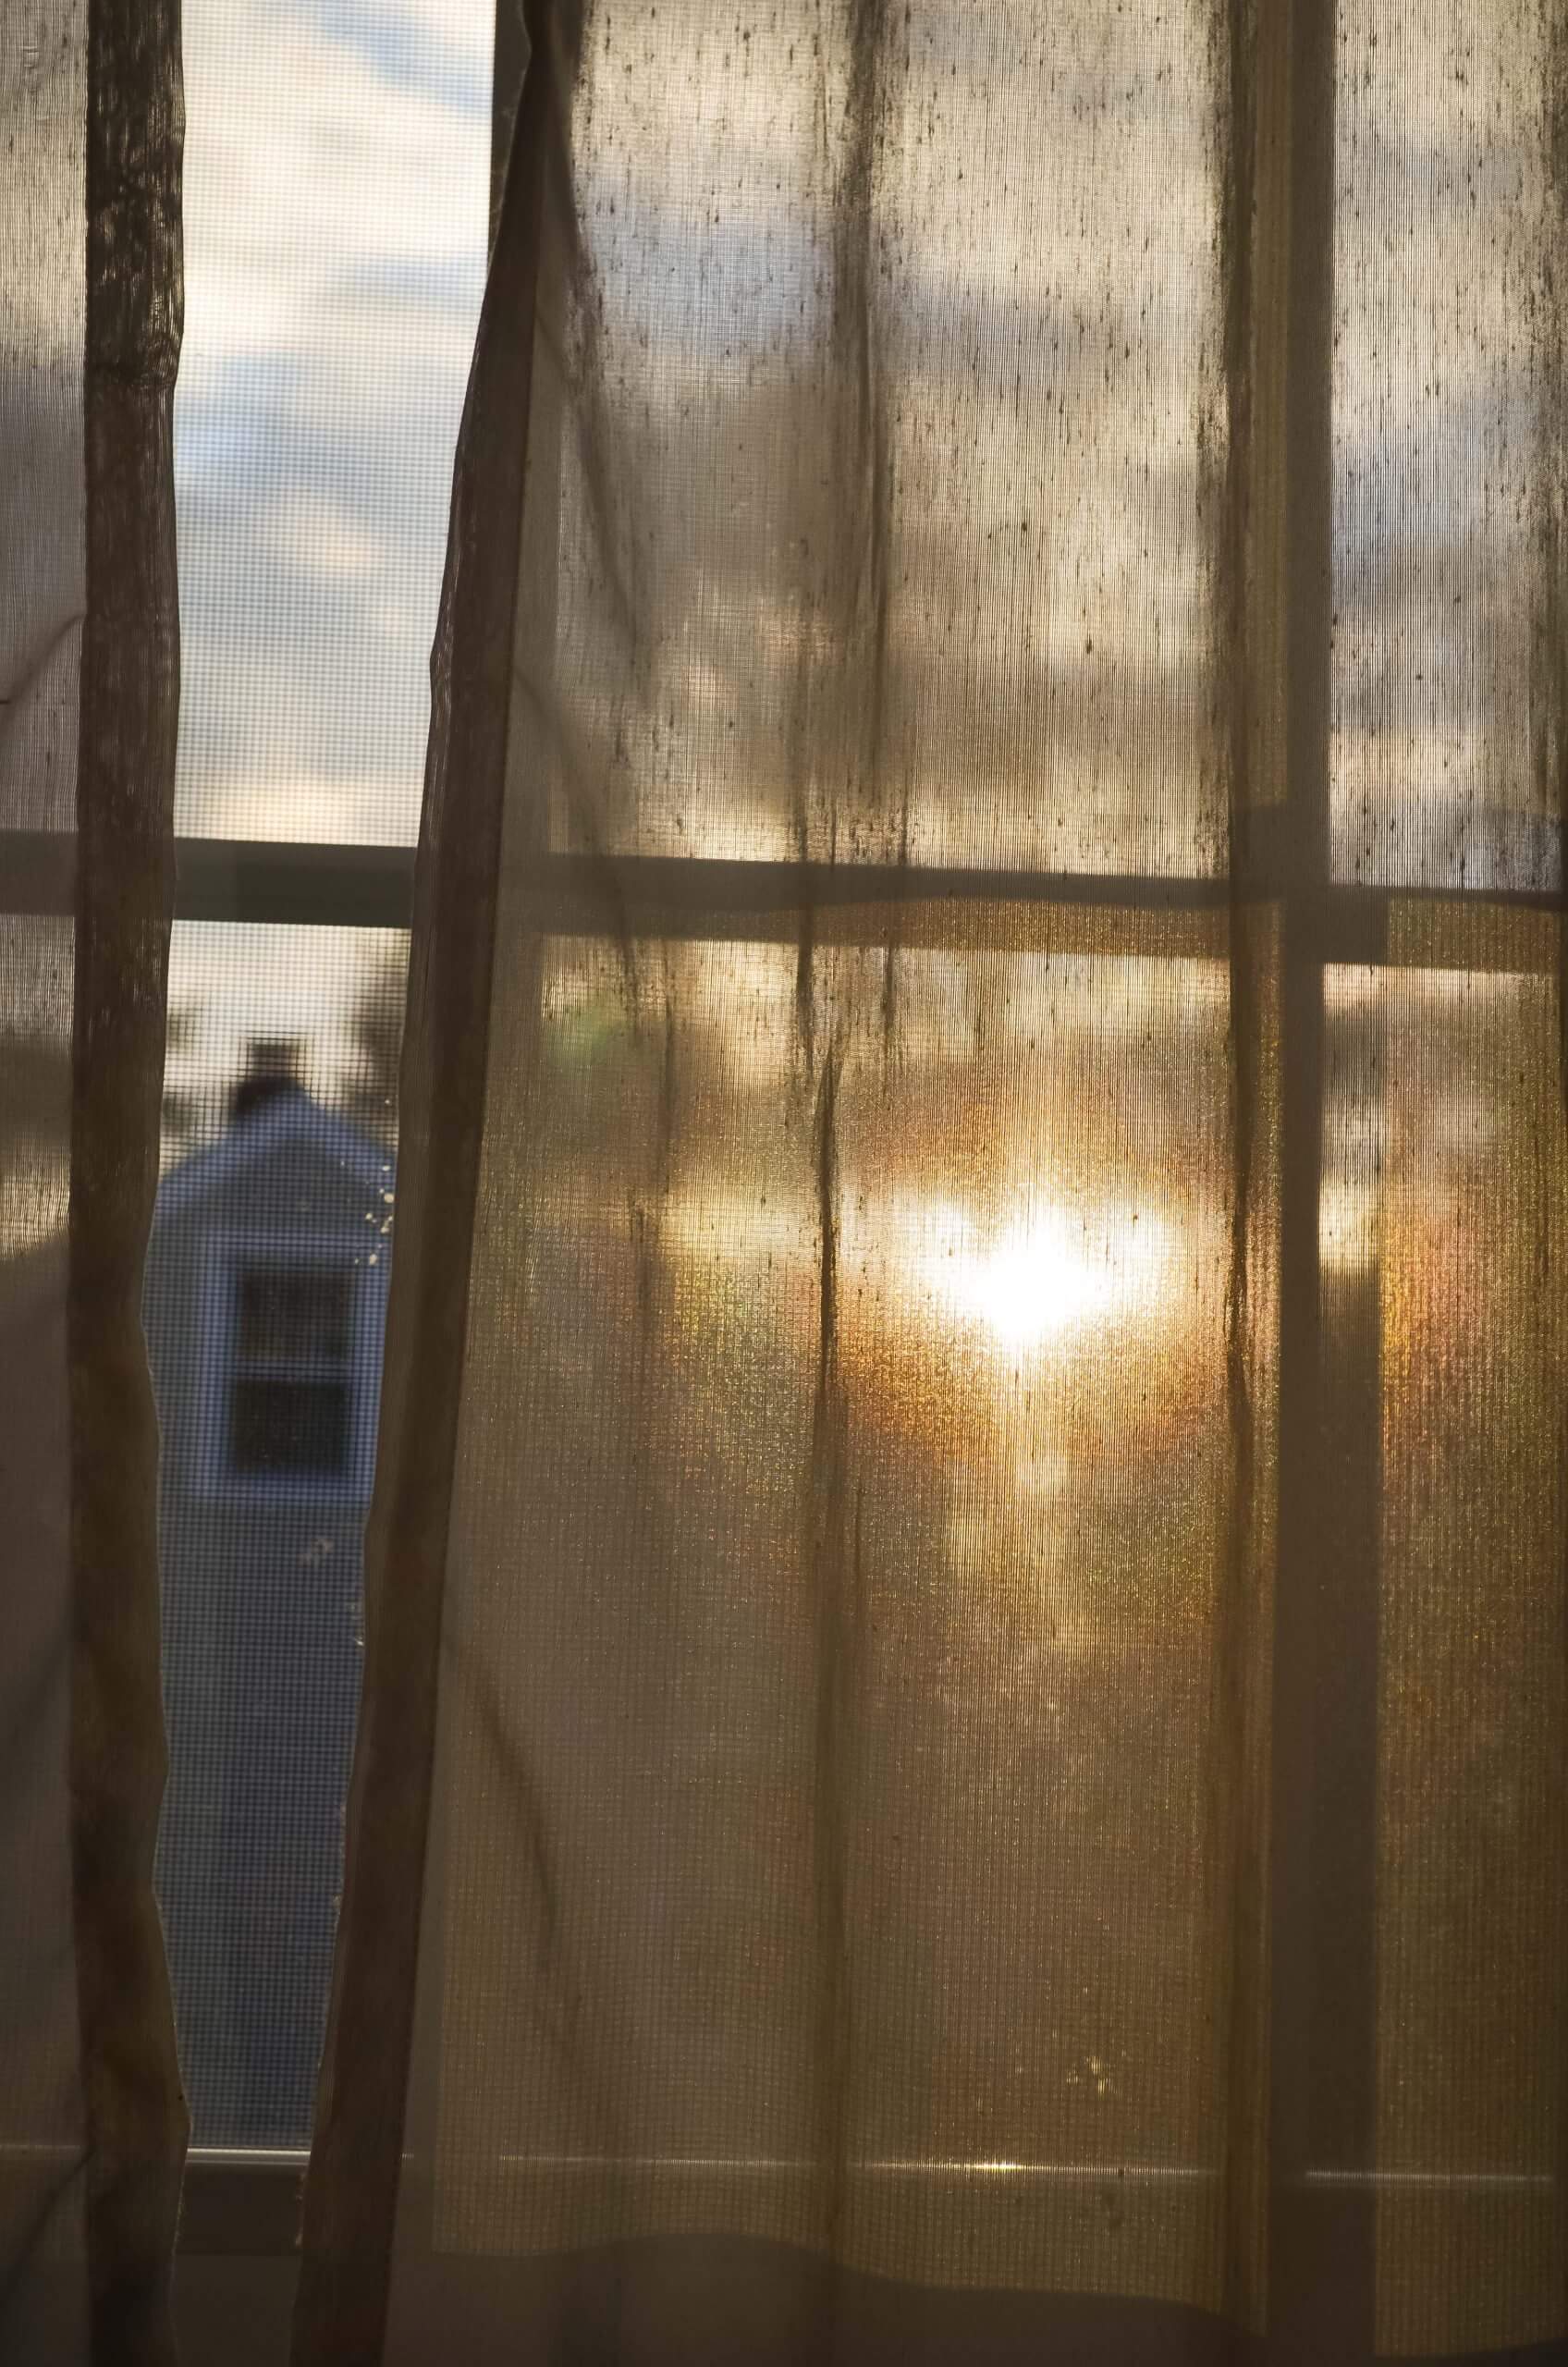 A curtain is drawn over a window. Sun shines through the curtain.